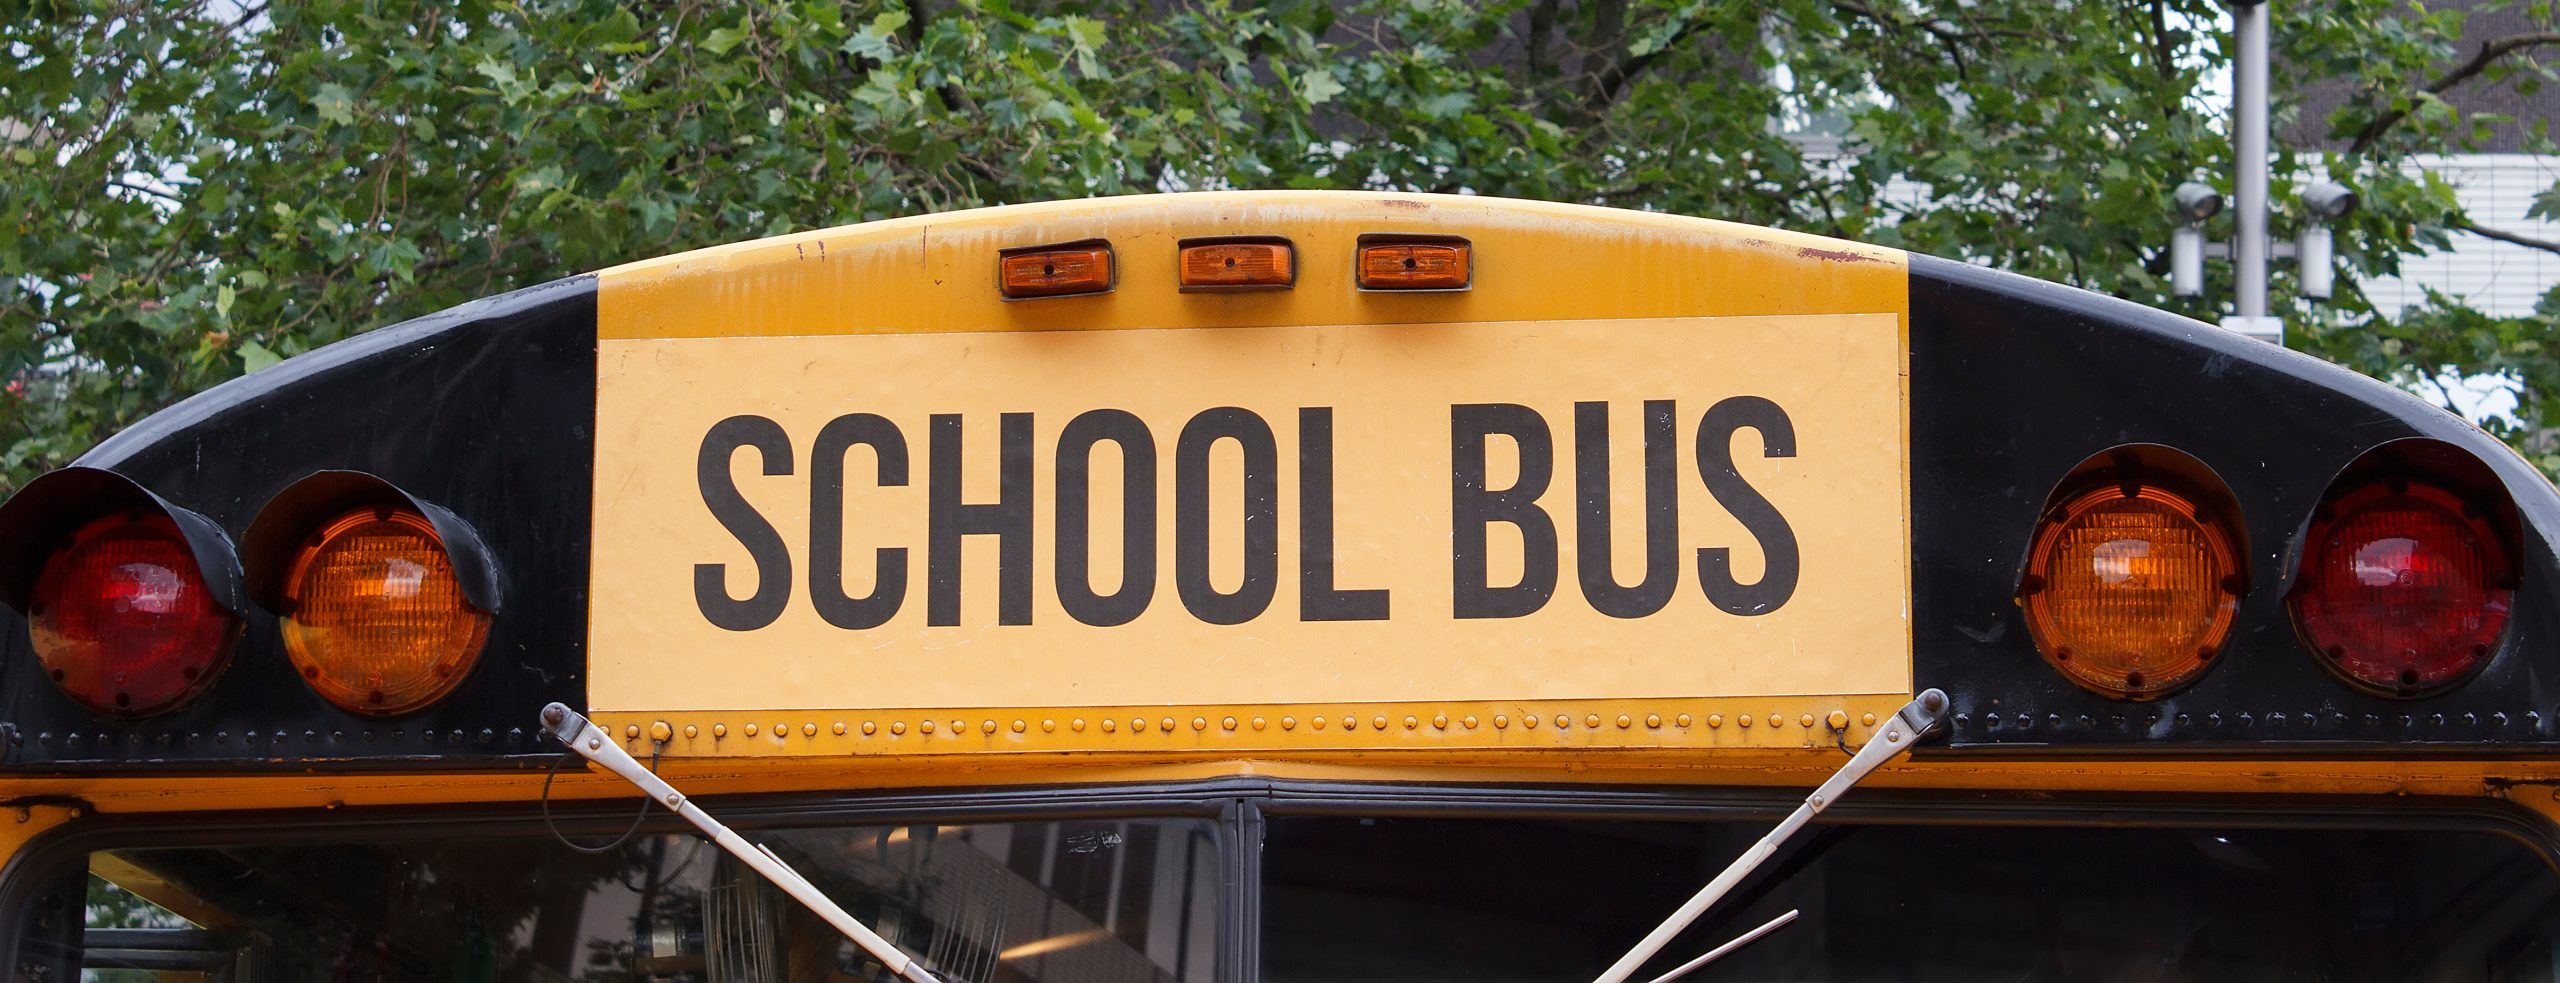 Retro School Bus close up, visible sign